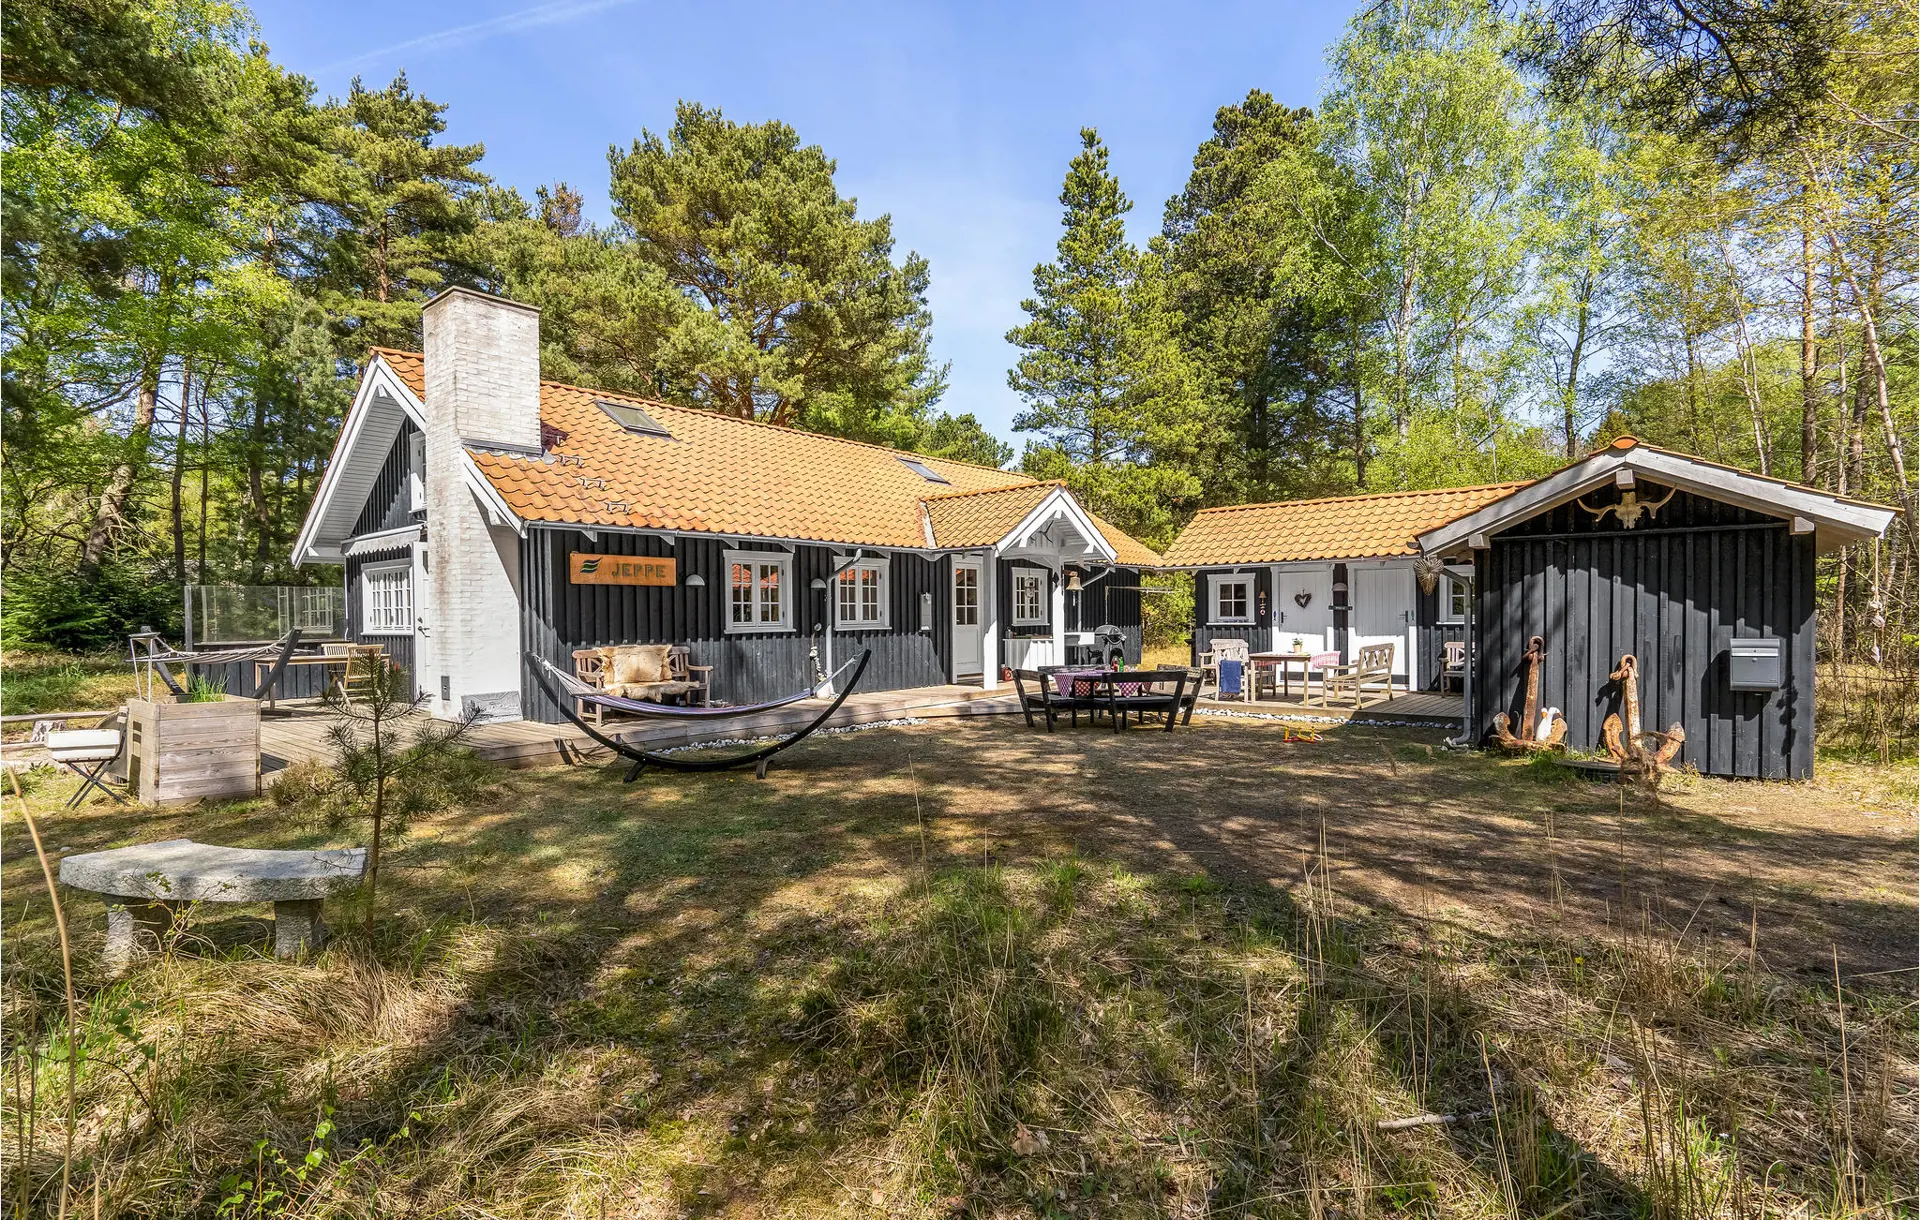 Haus K30934 in Ulvshale Skov, Møn